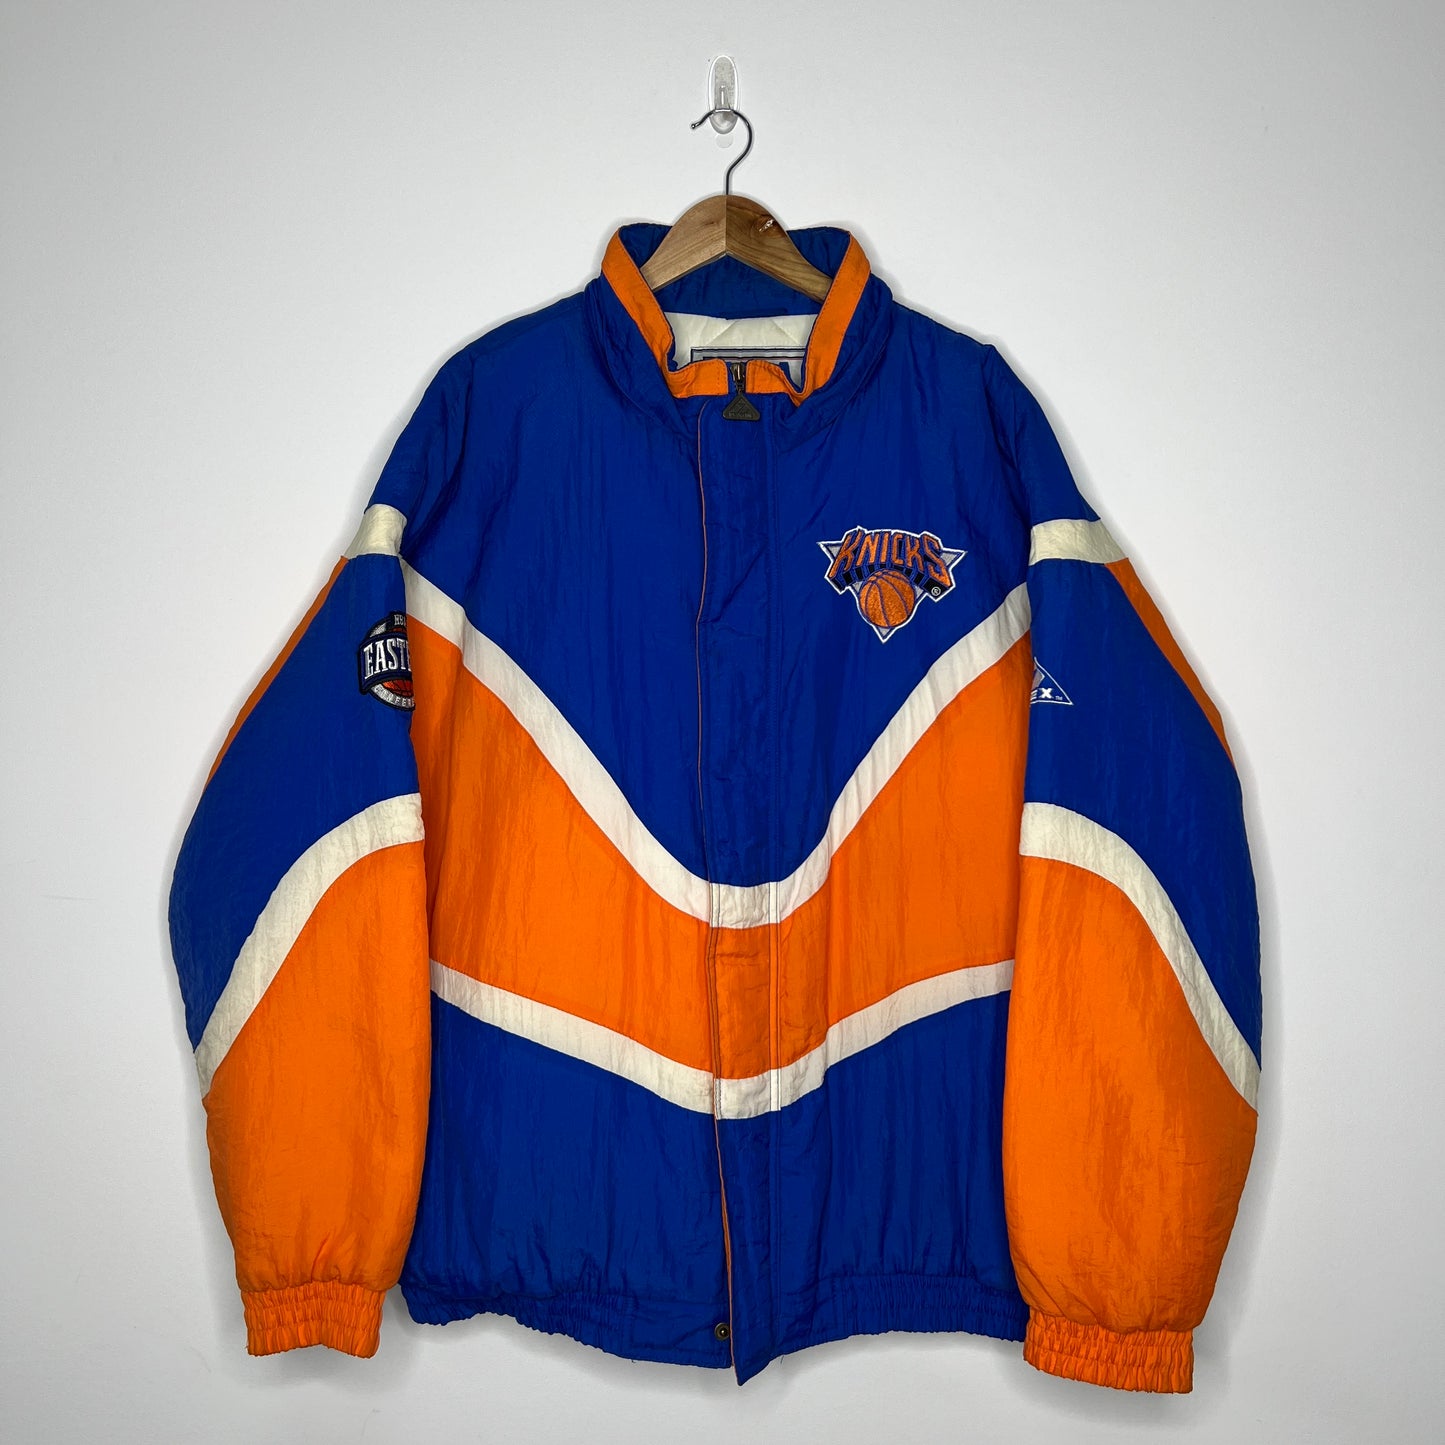 New York Knicks Jacket